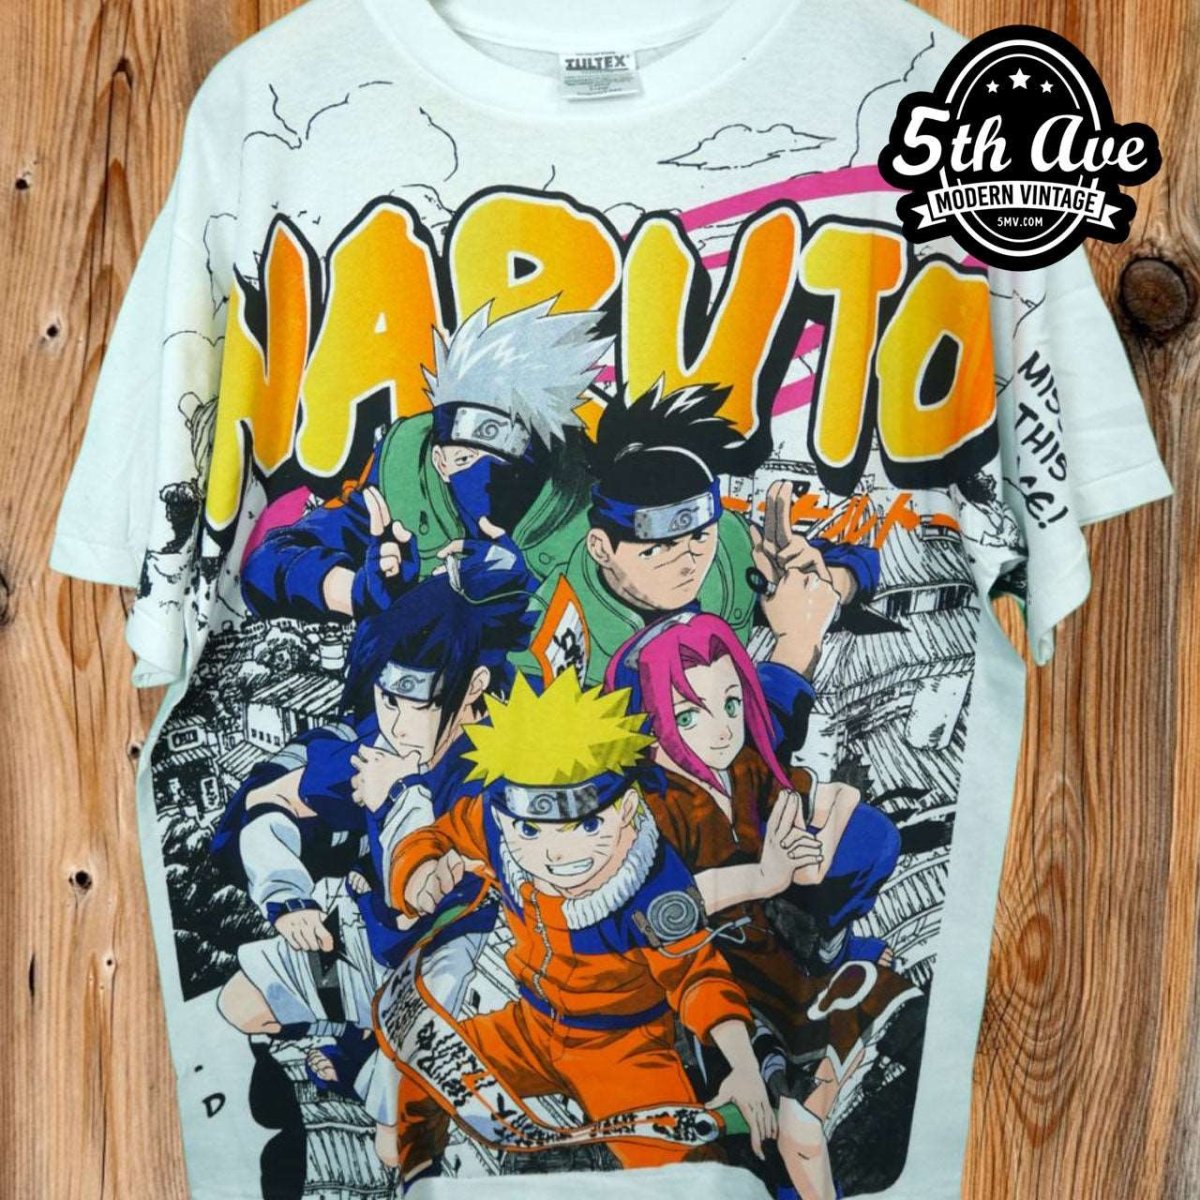 Naruto Shippuden - AOP all over print New Vintage Anime T shirt - Vintage Band Shirts